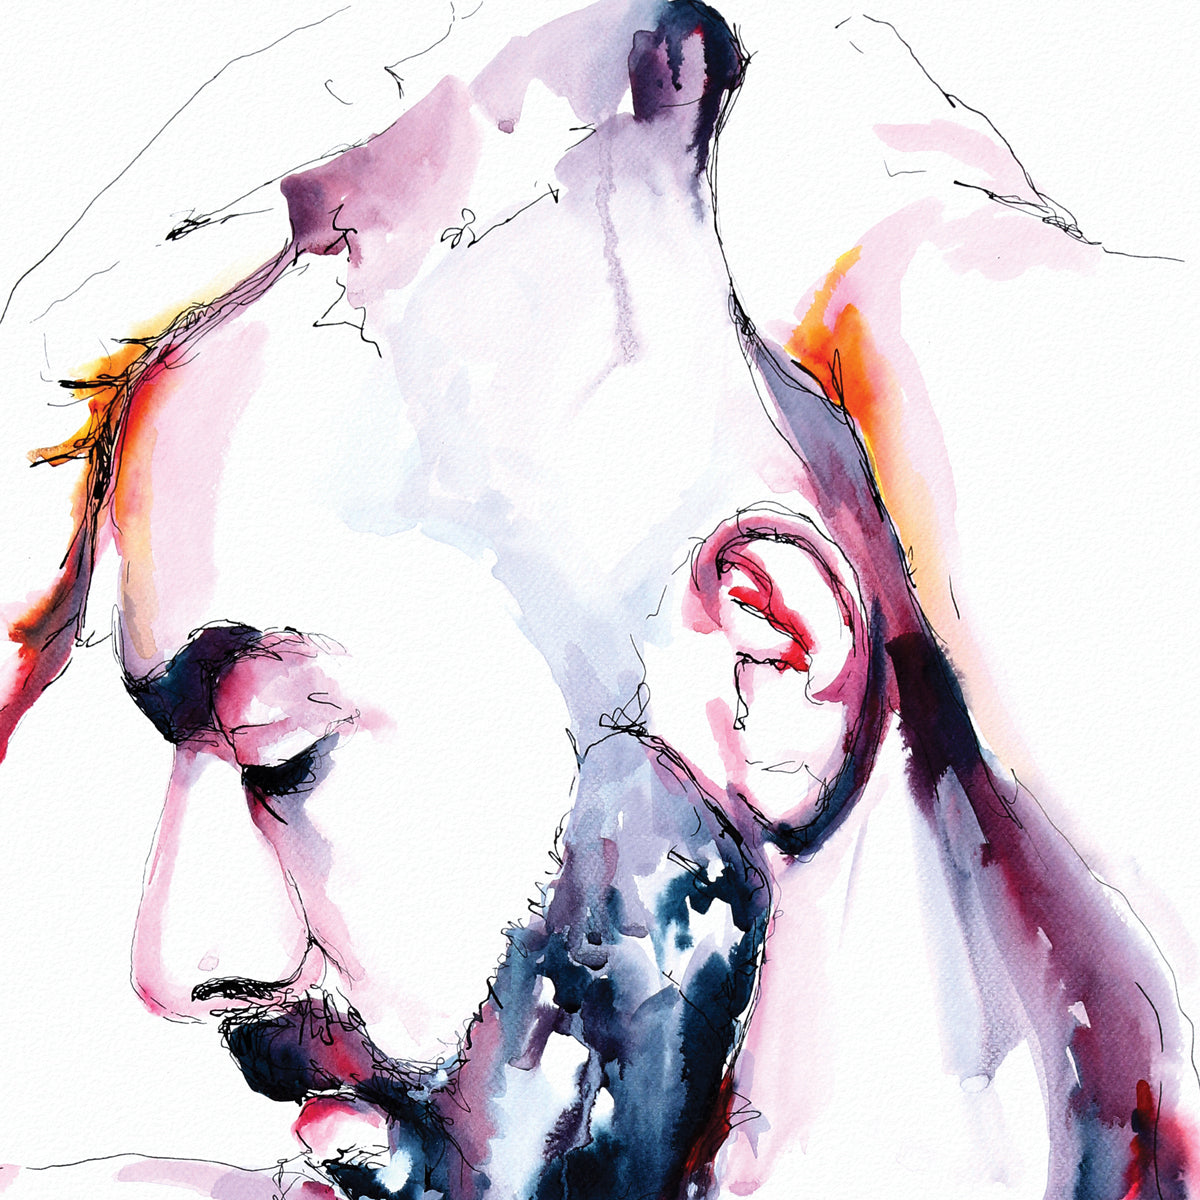 Soulful Gaze - Thick-Bearded Man with Chiseled Torso - Giclee Art Print